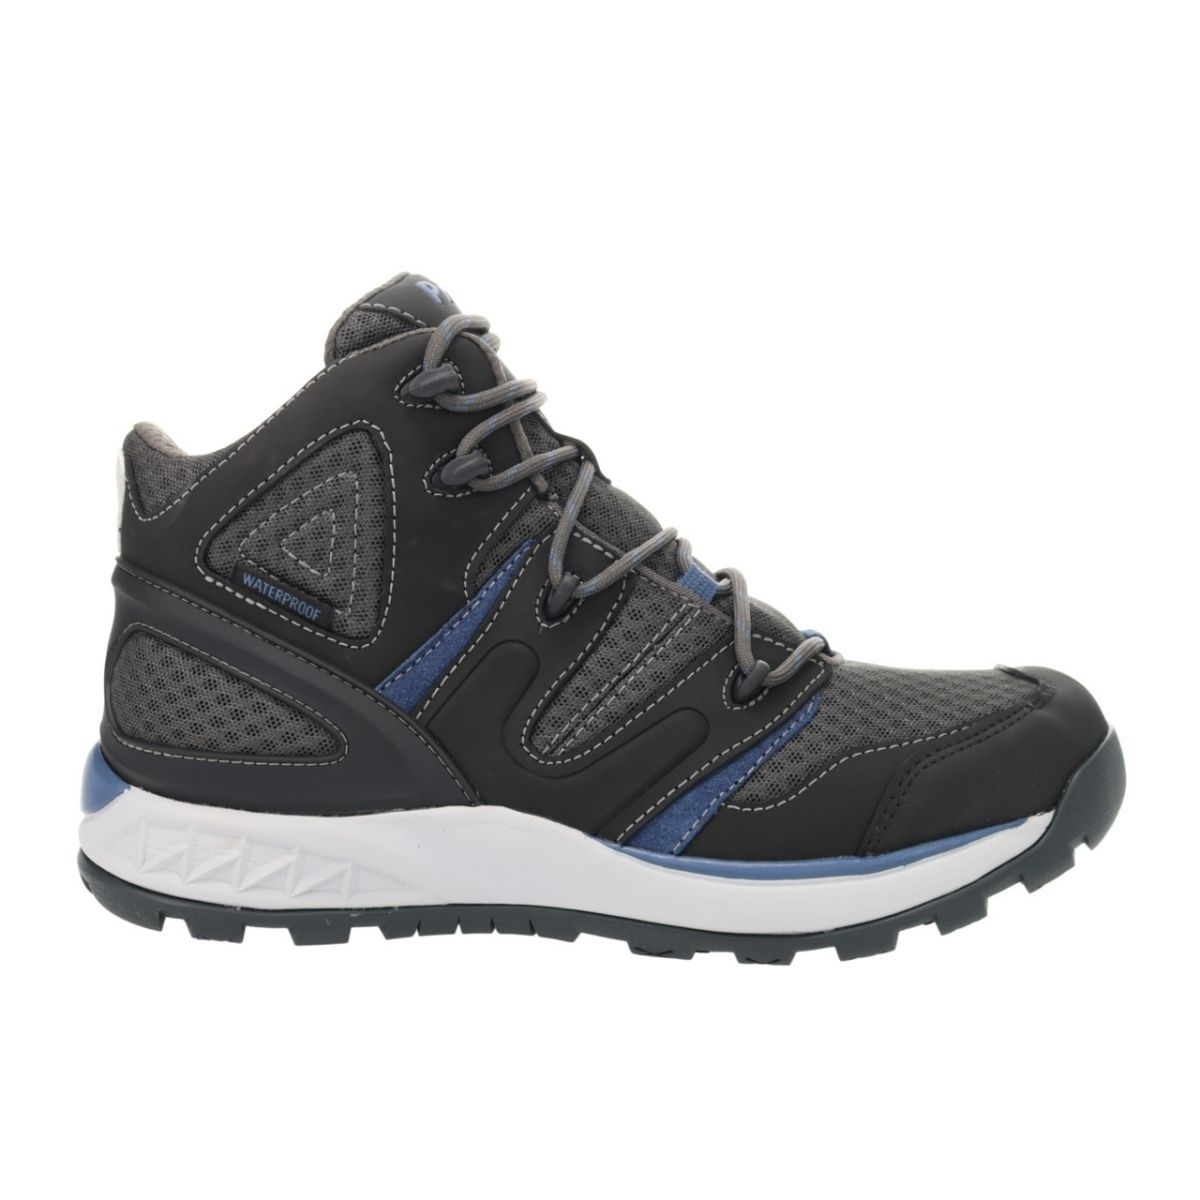 Propet Men's Veymont Waterproof Hiking Boot Grey/Blue - MOA022SGRB GREY/BLUE - GREY/BLUE, 11